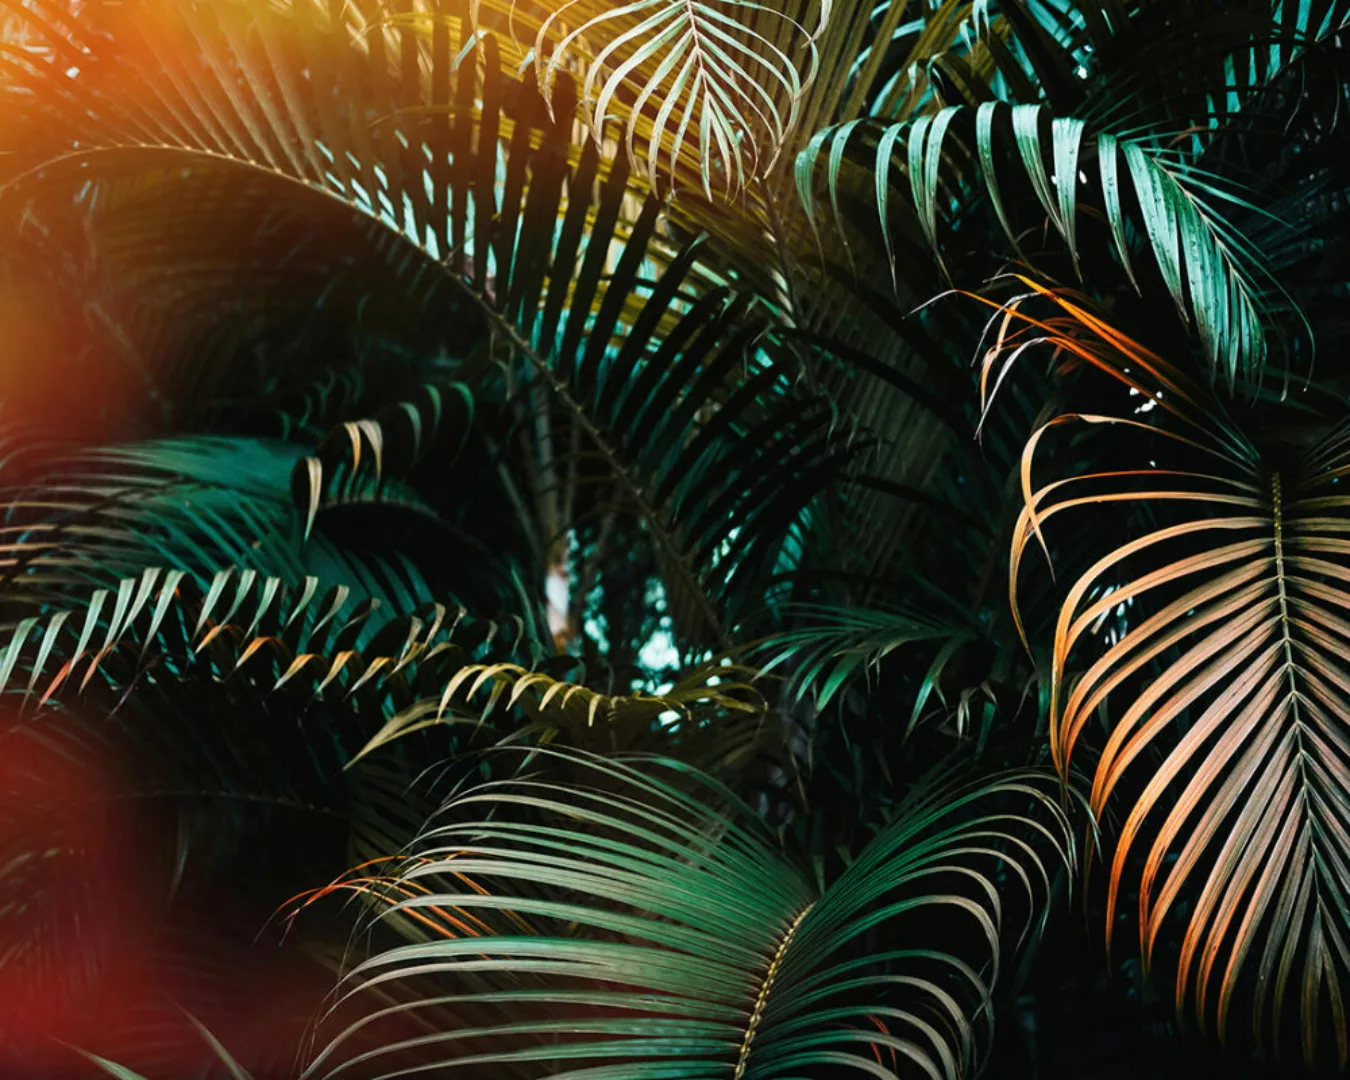 Fototapete "Jungle colour" 3,50x2,55 m / Strukturvlies Klassik günstig online kaufen